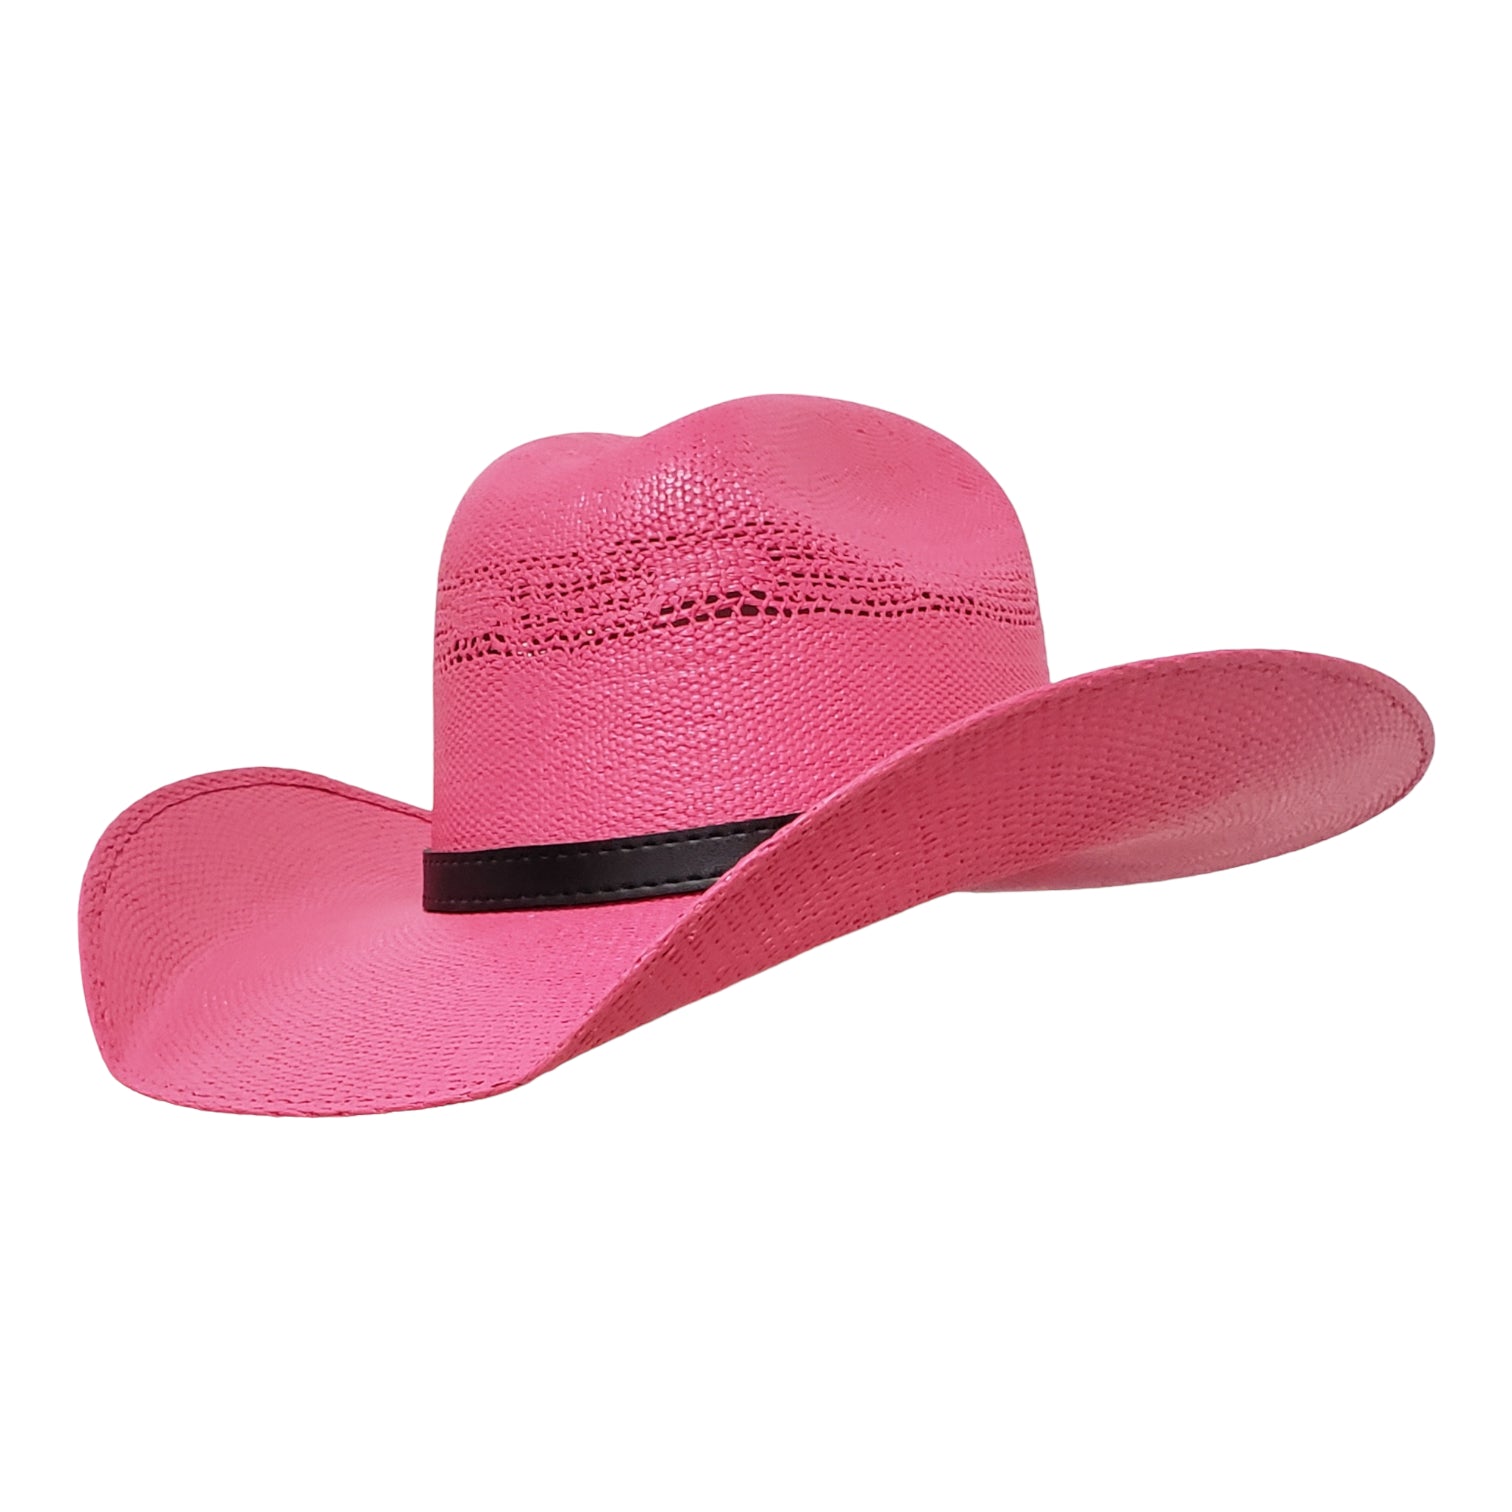  Bangora Straw Hat